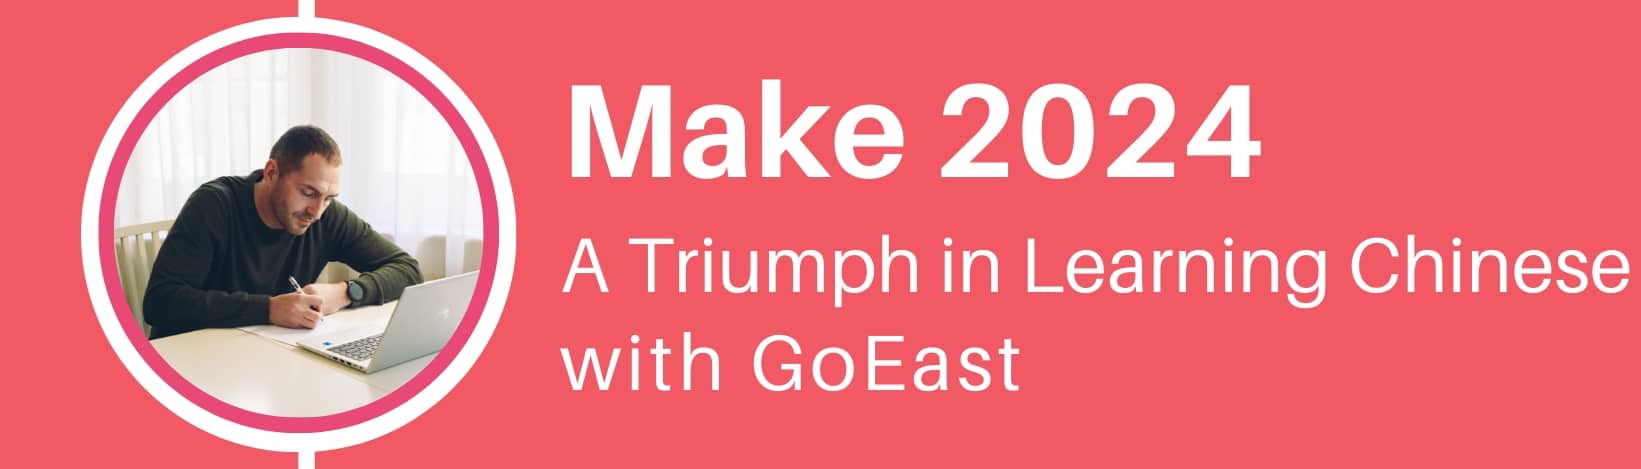 make 2024 a triumph